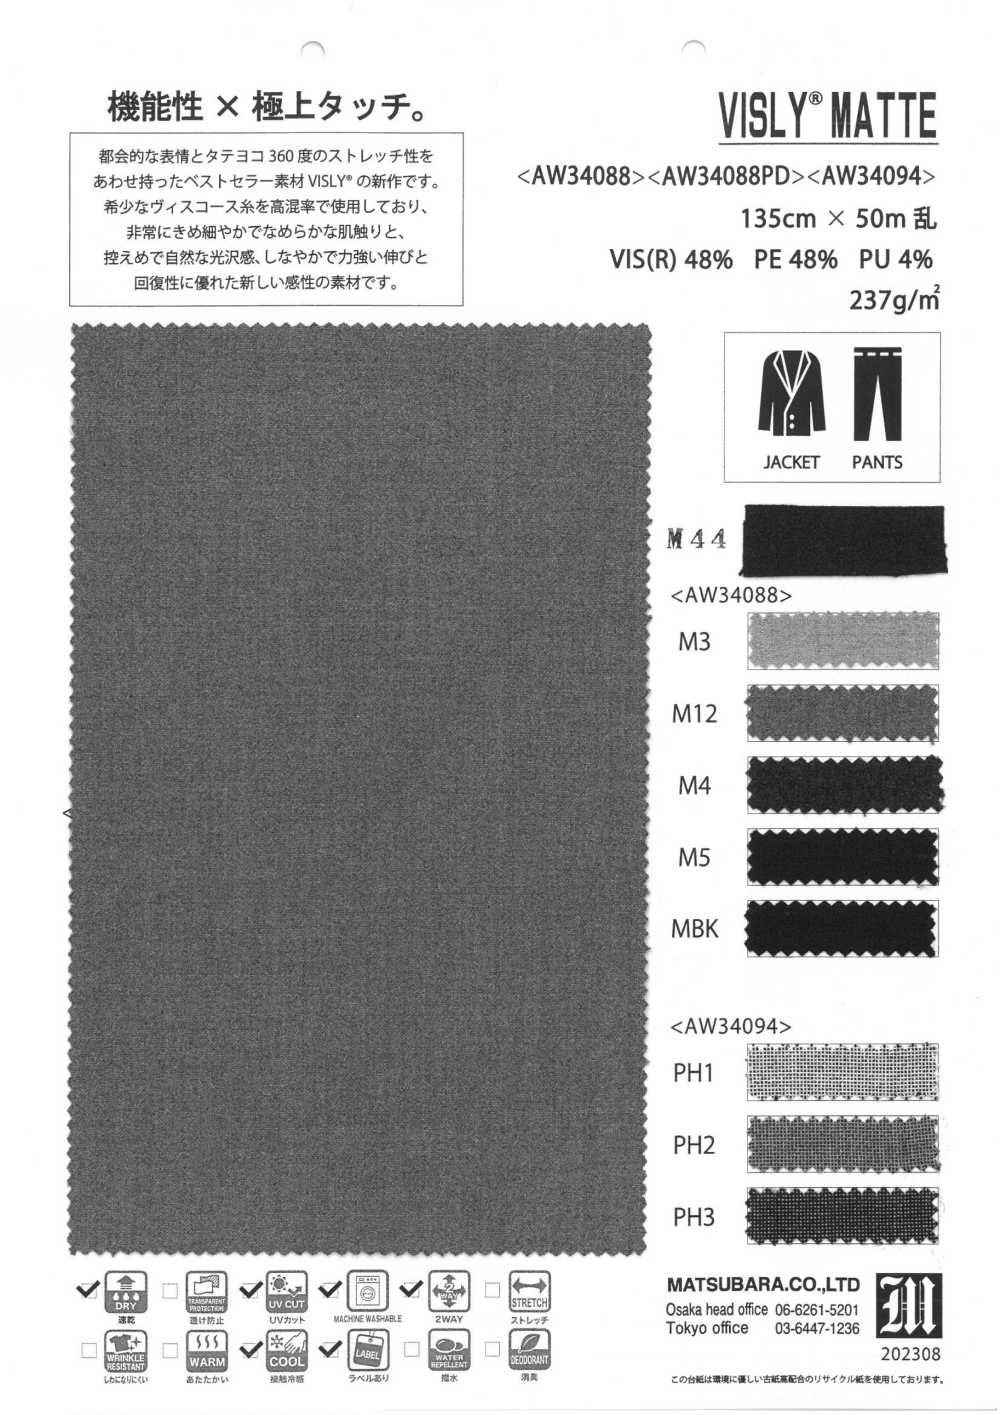 AW34088PD Bisley Mat[Textilgewebe] Matsubara